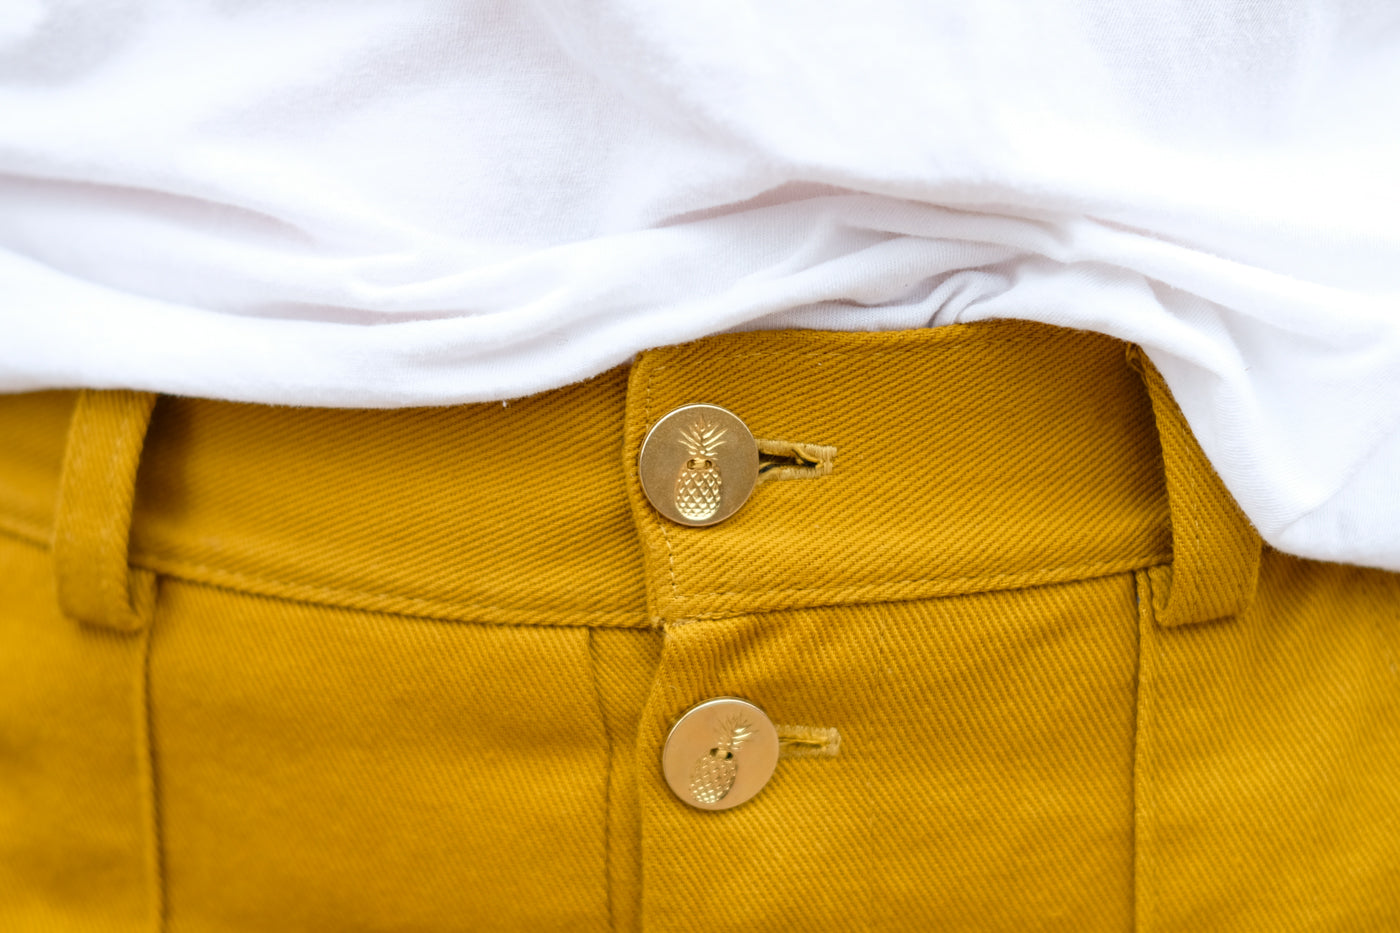 Pineapple Button Detail on Sarah's Golden Lander Pants